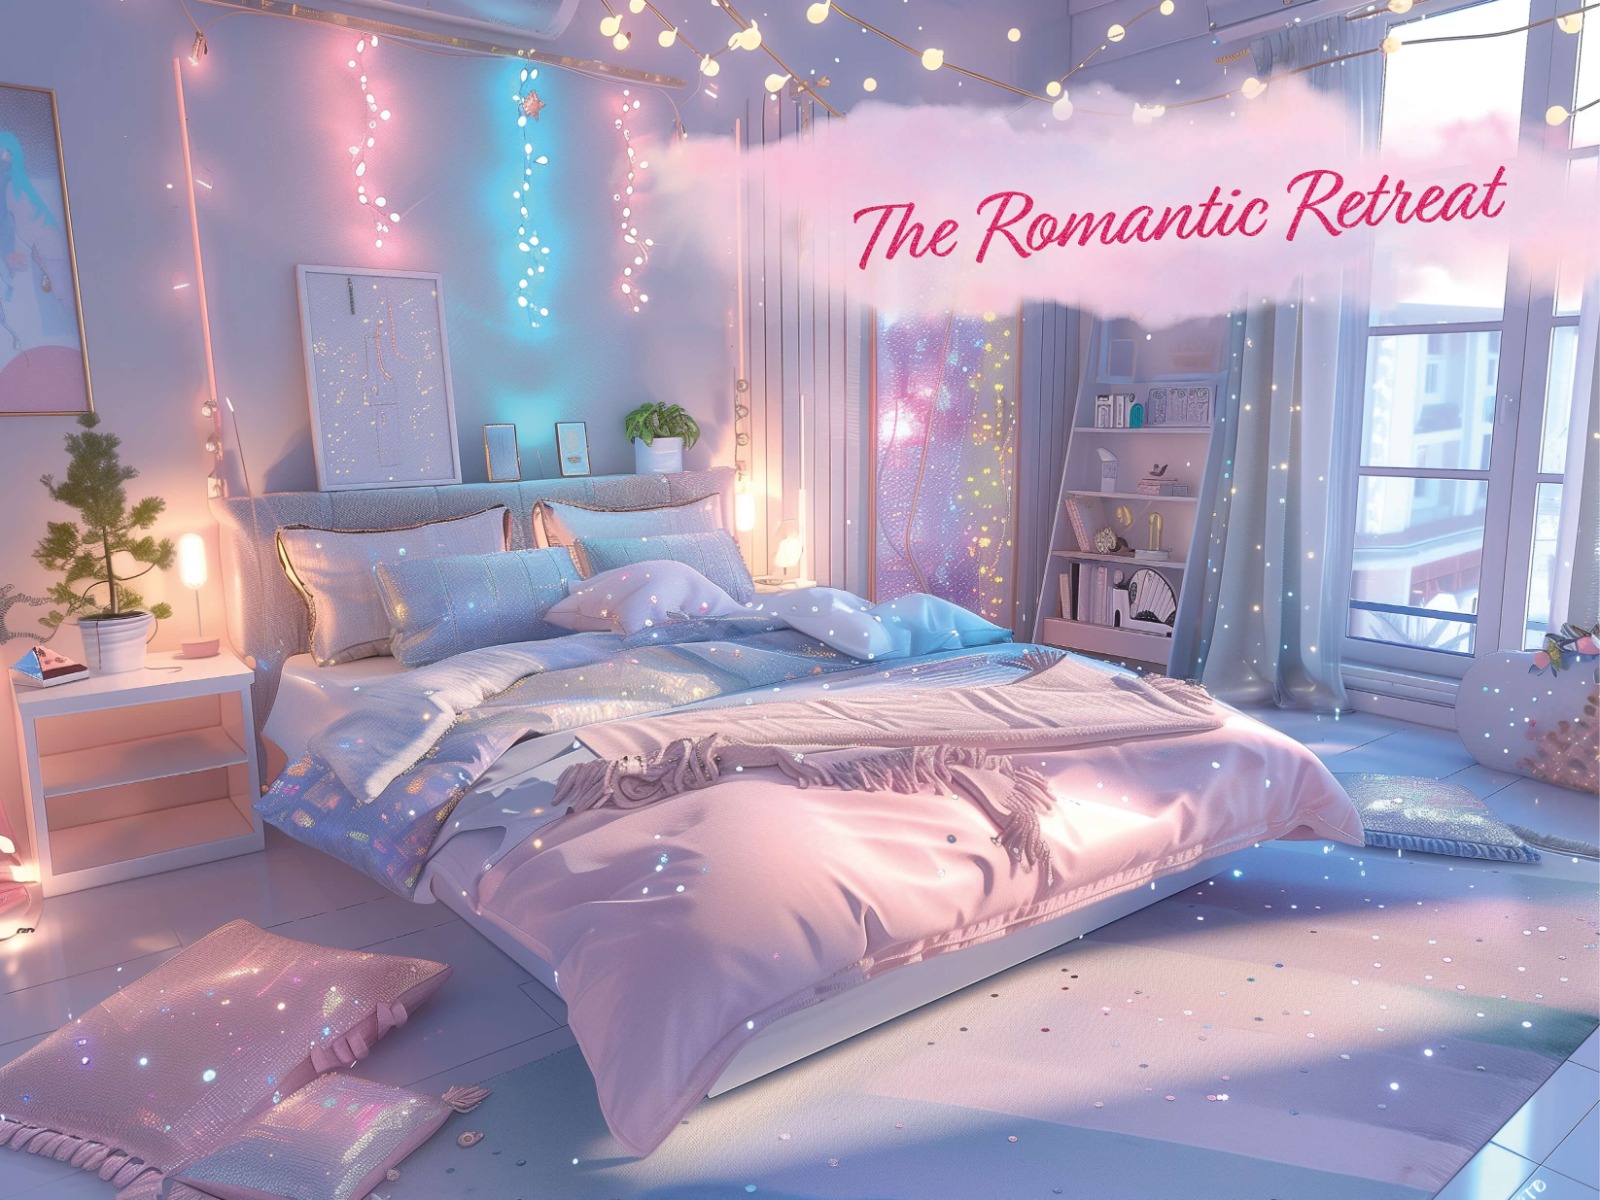 Romantic retreat bedroom